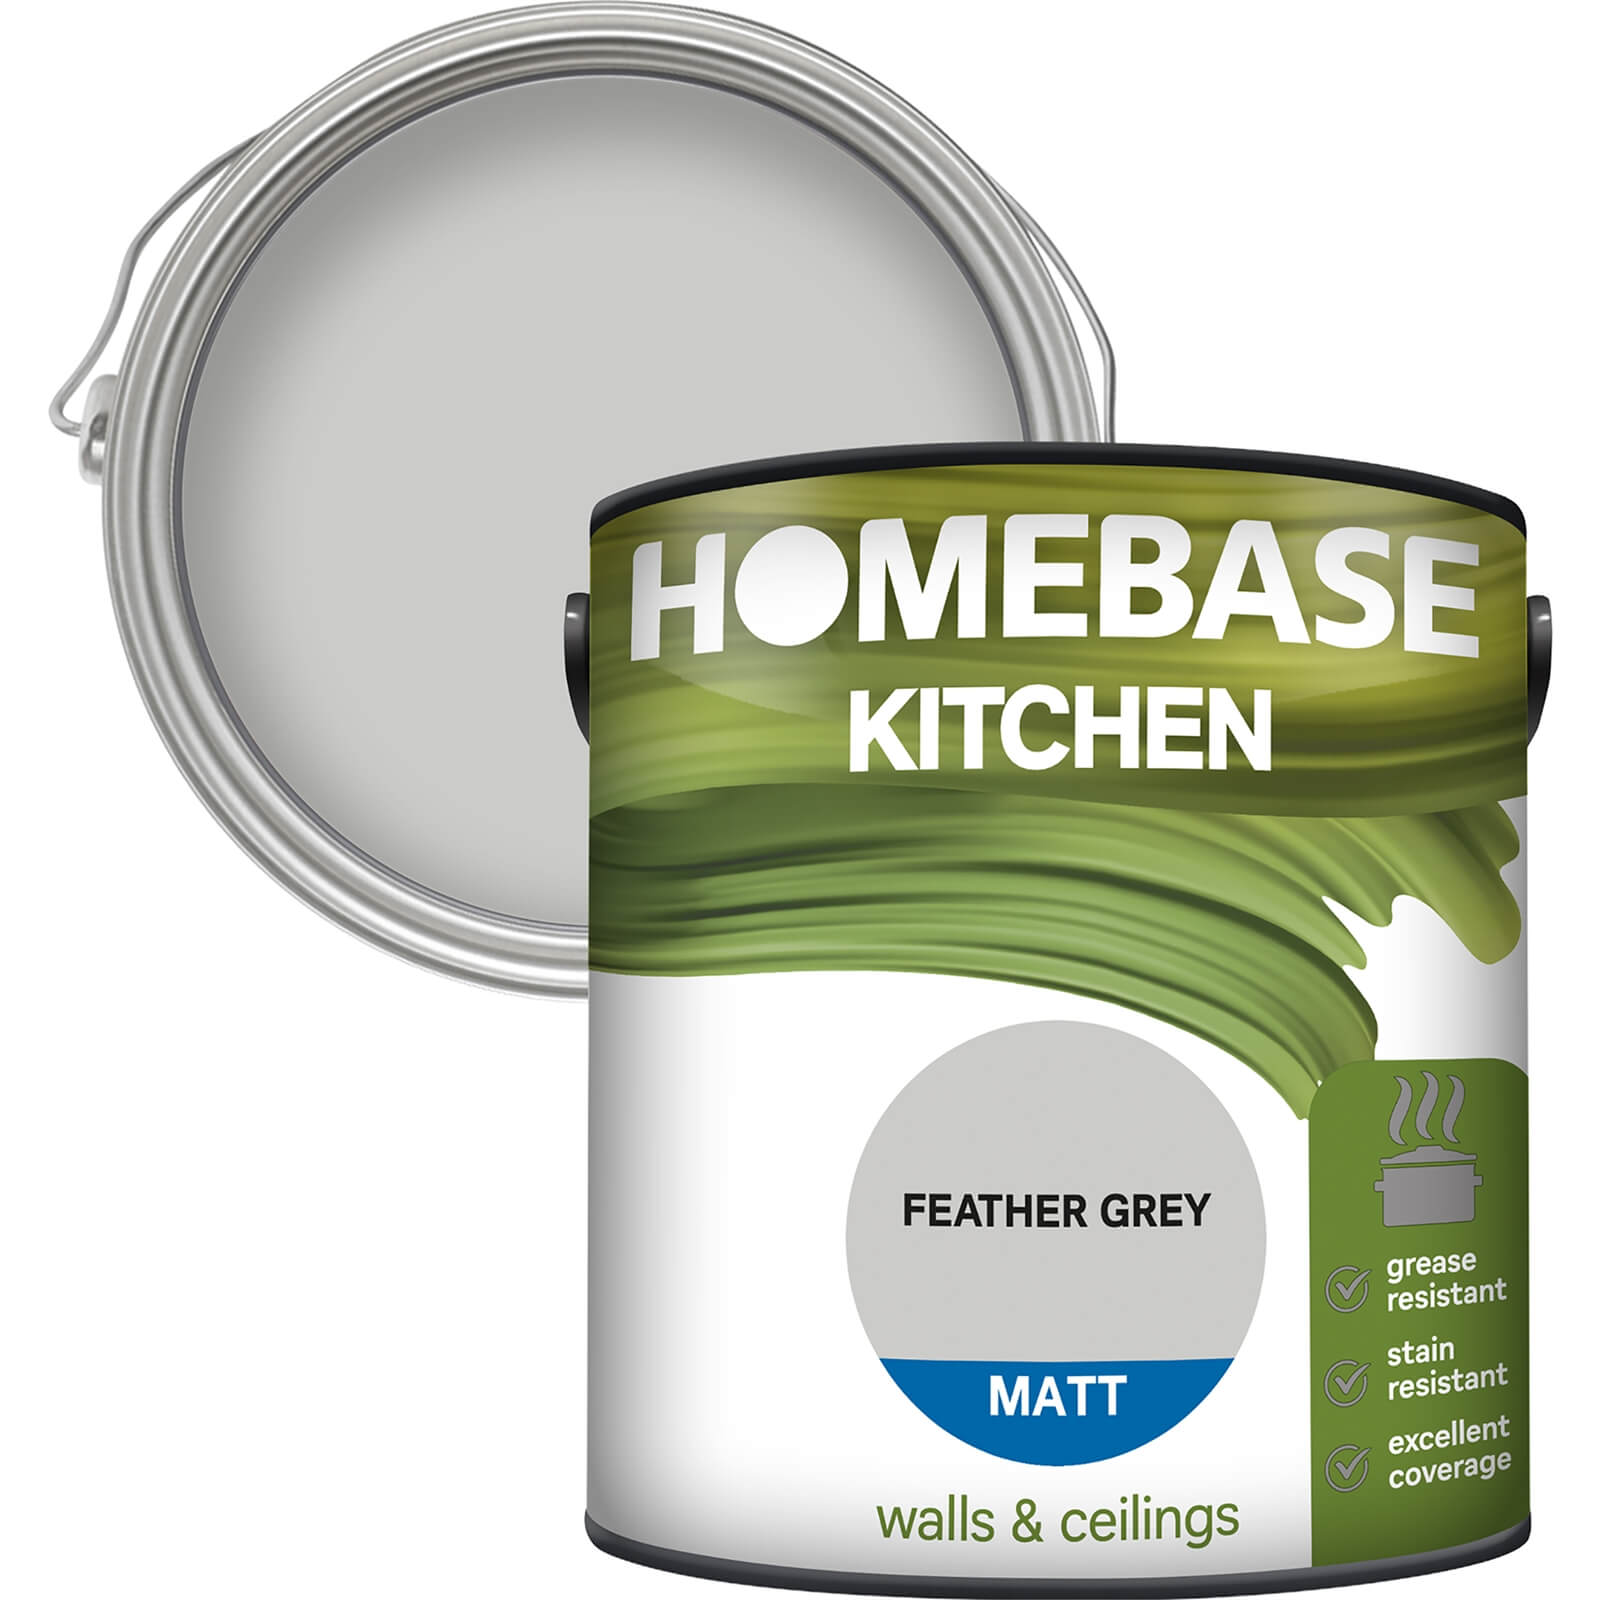 Homebase Kitchen Matt Paint - Feather Grey 2.5L